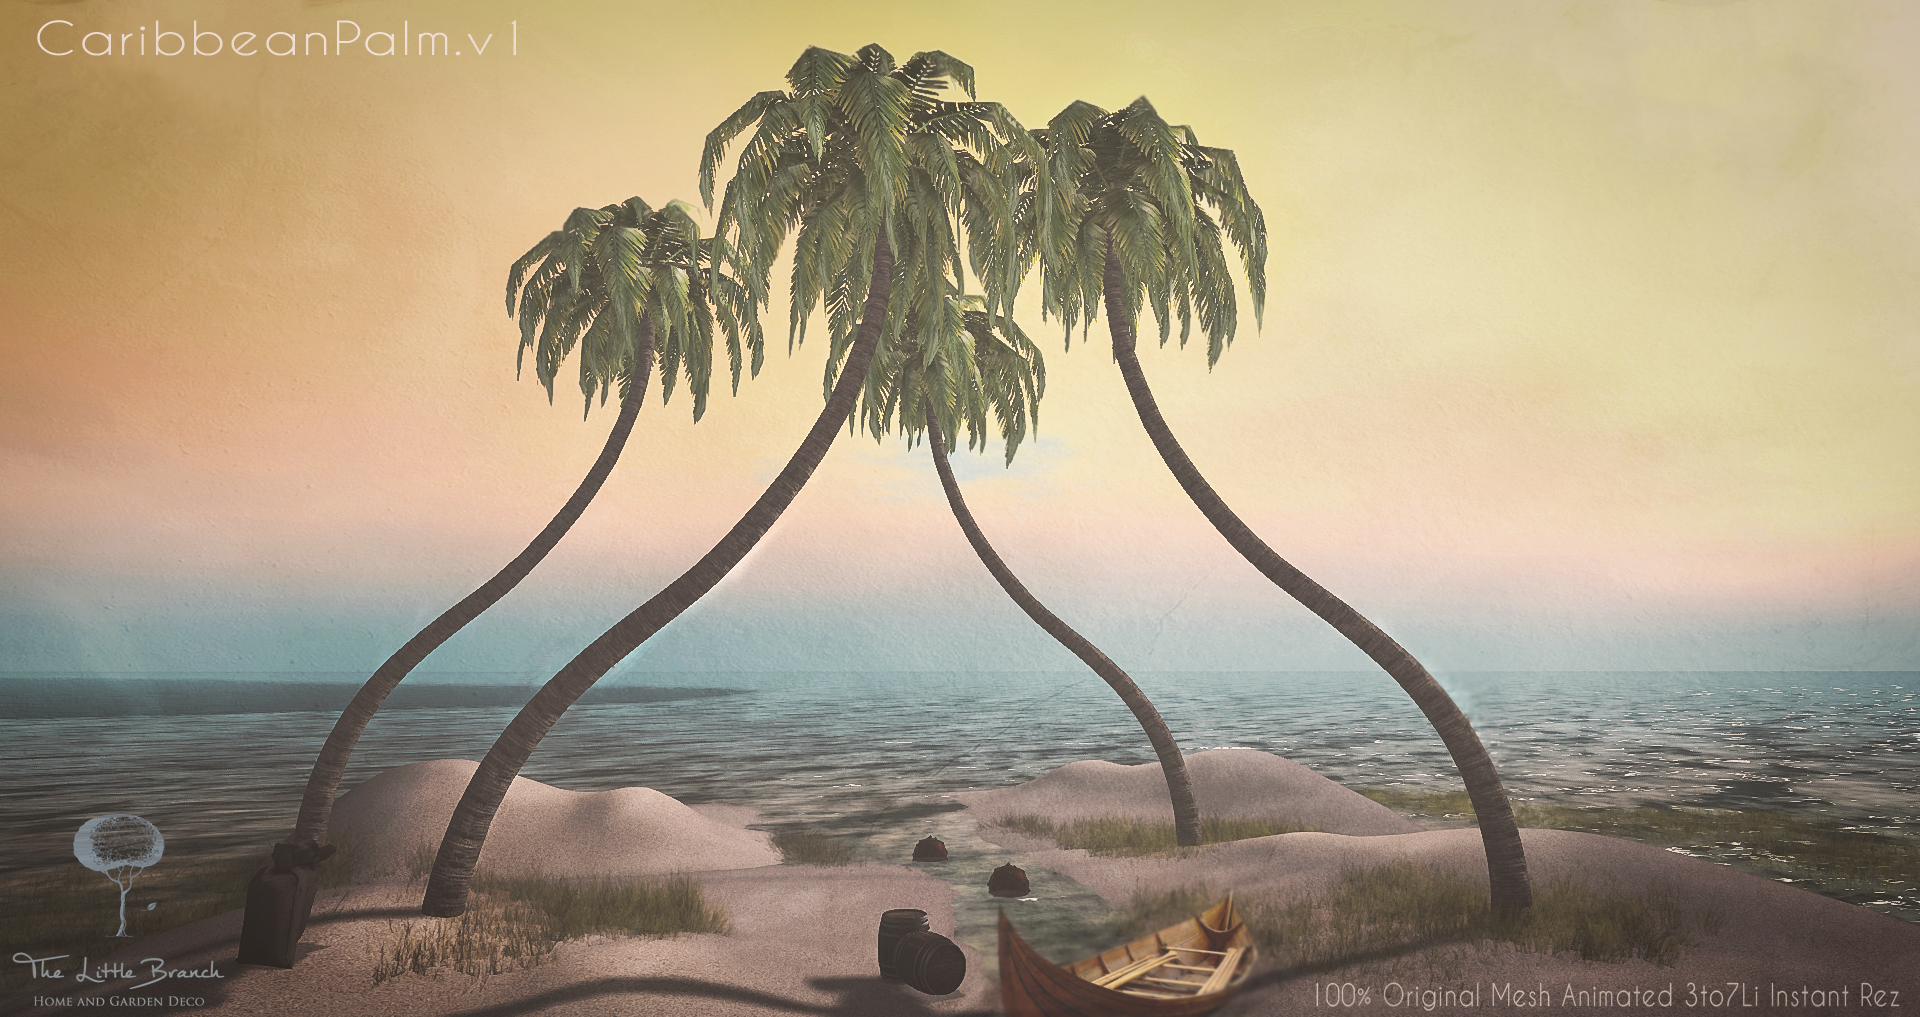 The Little Branch – Caribbean Palm v1